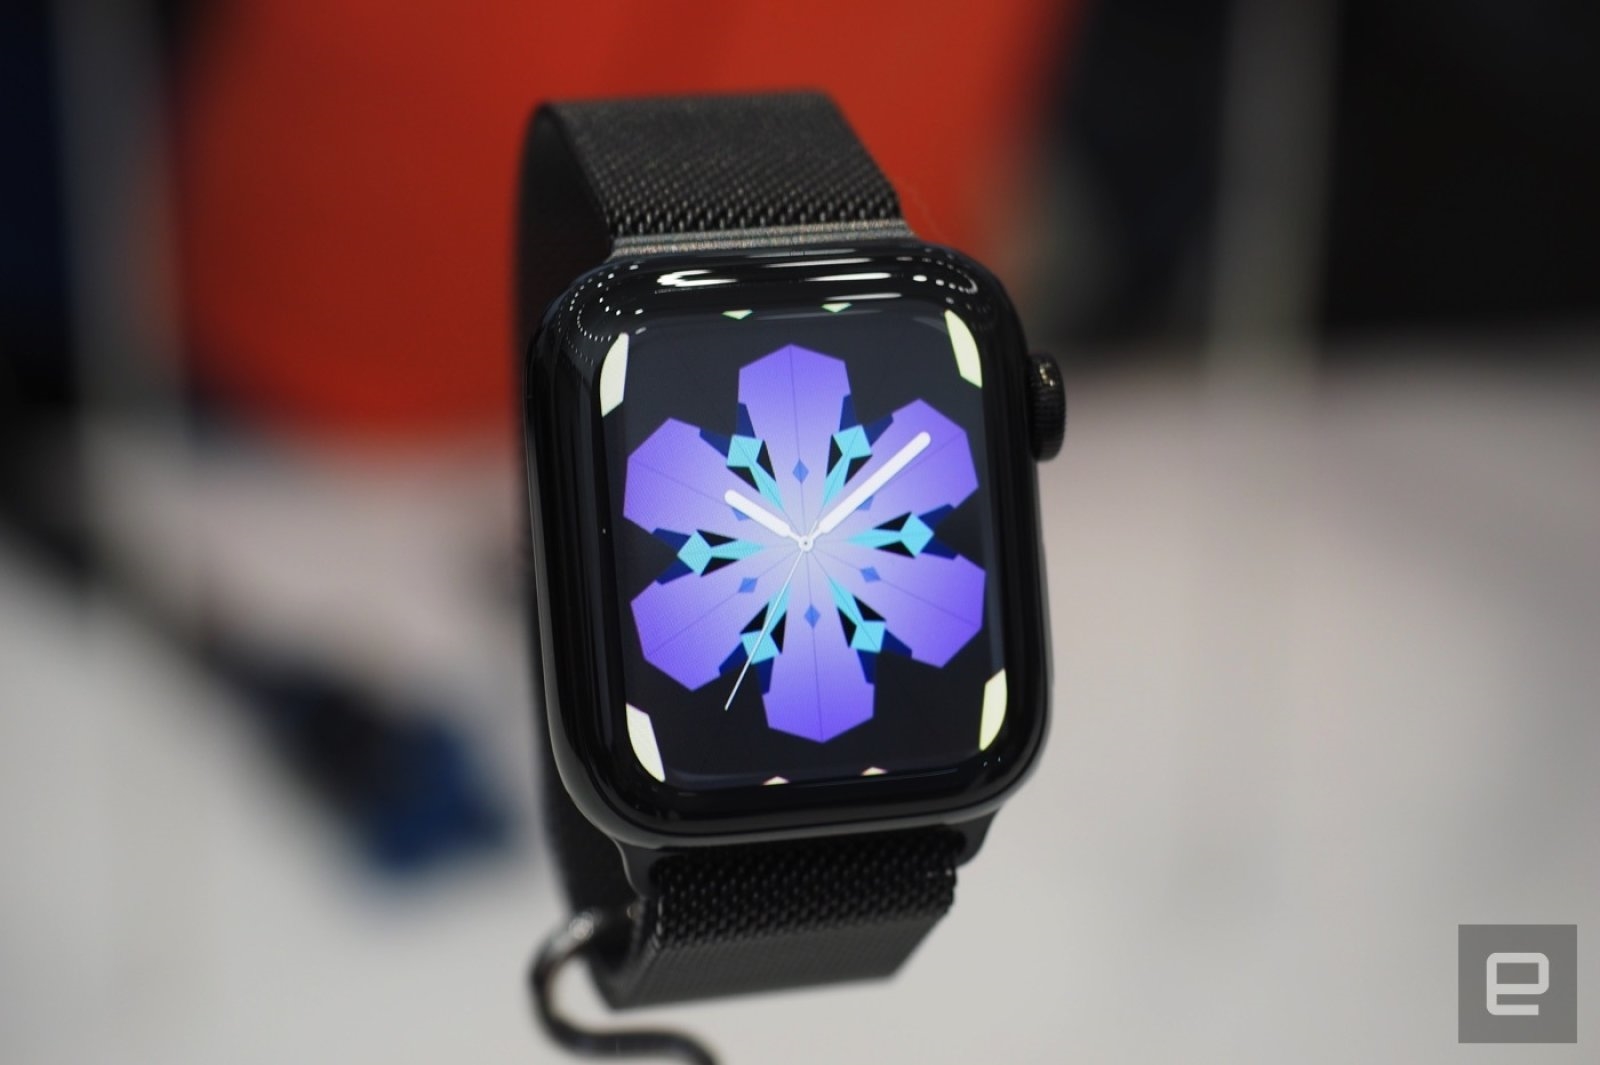 Deals roundup: Apple Watch Series 4, August Smart Lock and Razer gear | DeviceDaily.com